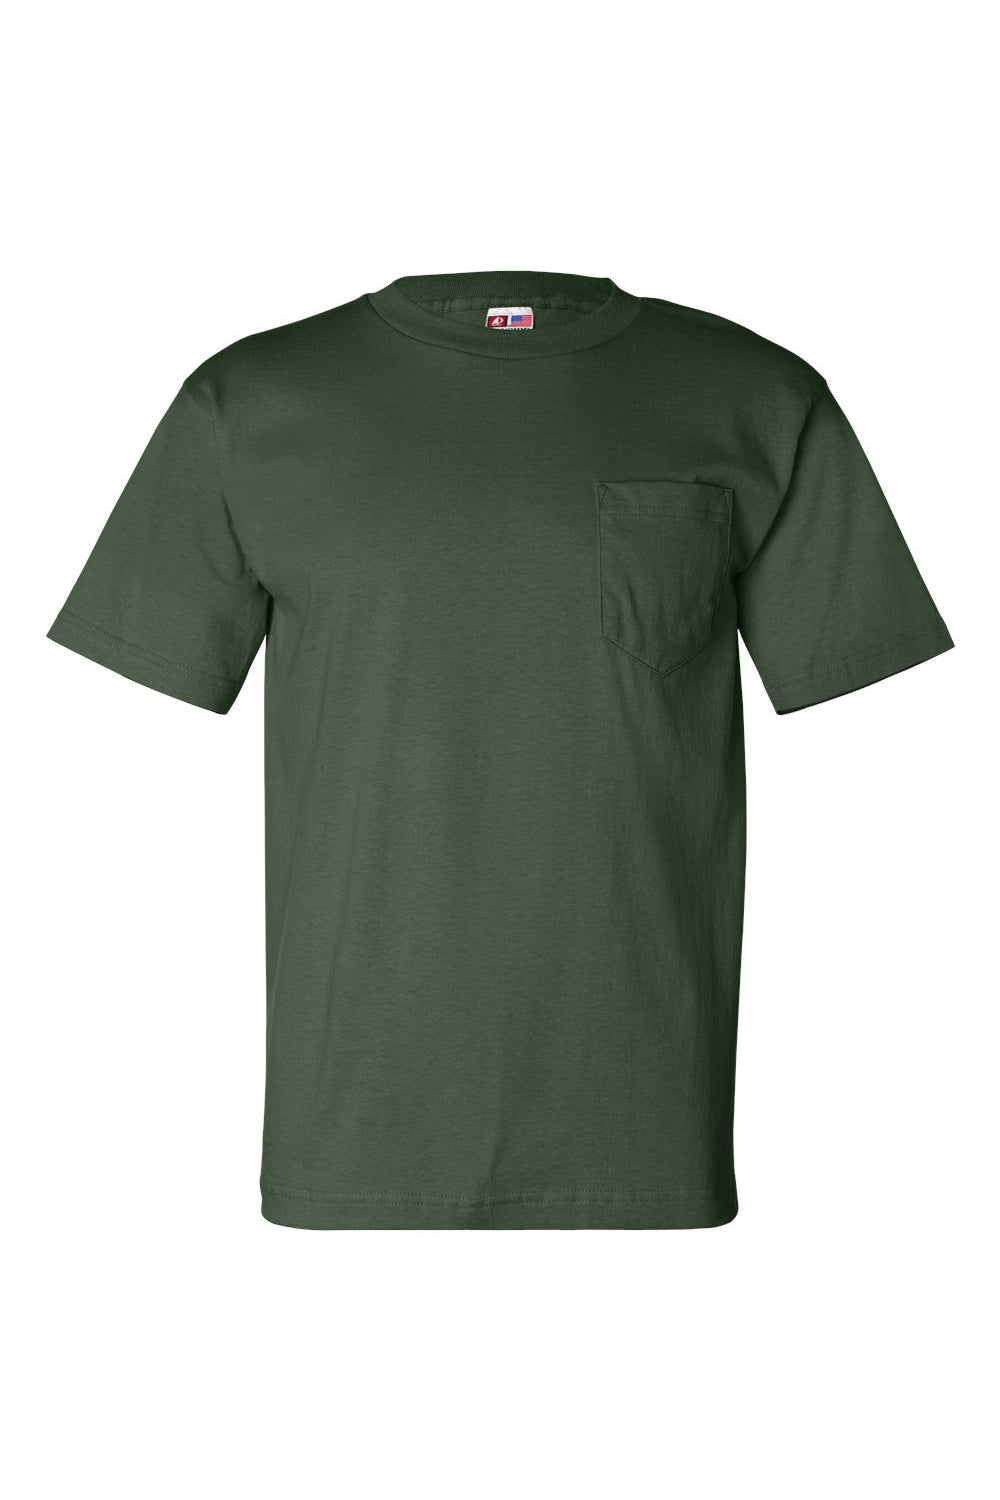 Bayside BA7100 Mens USA Made Short Sleeve Crewneck T-Shirt w/ Pocket Forest Green Flat Front